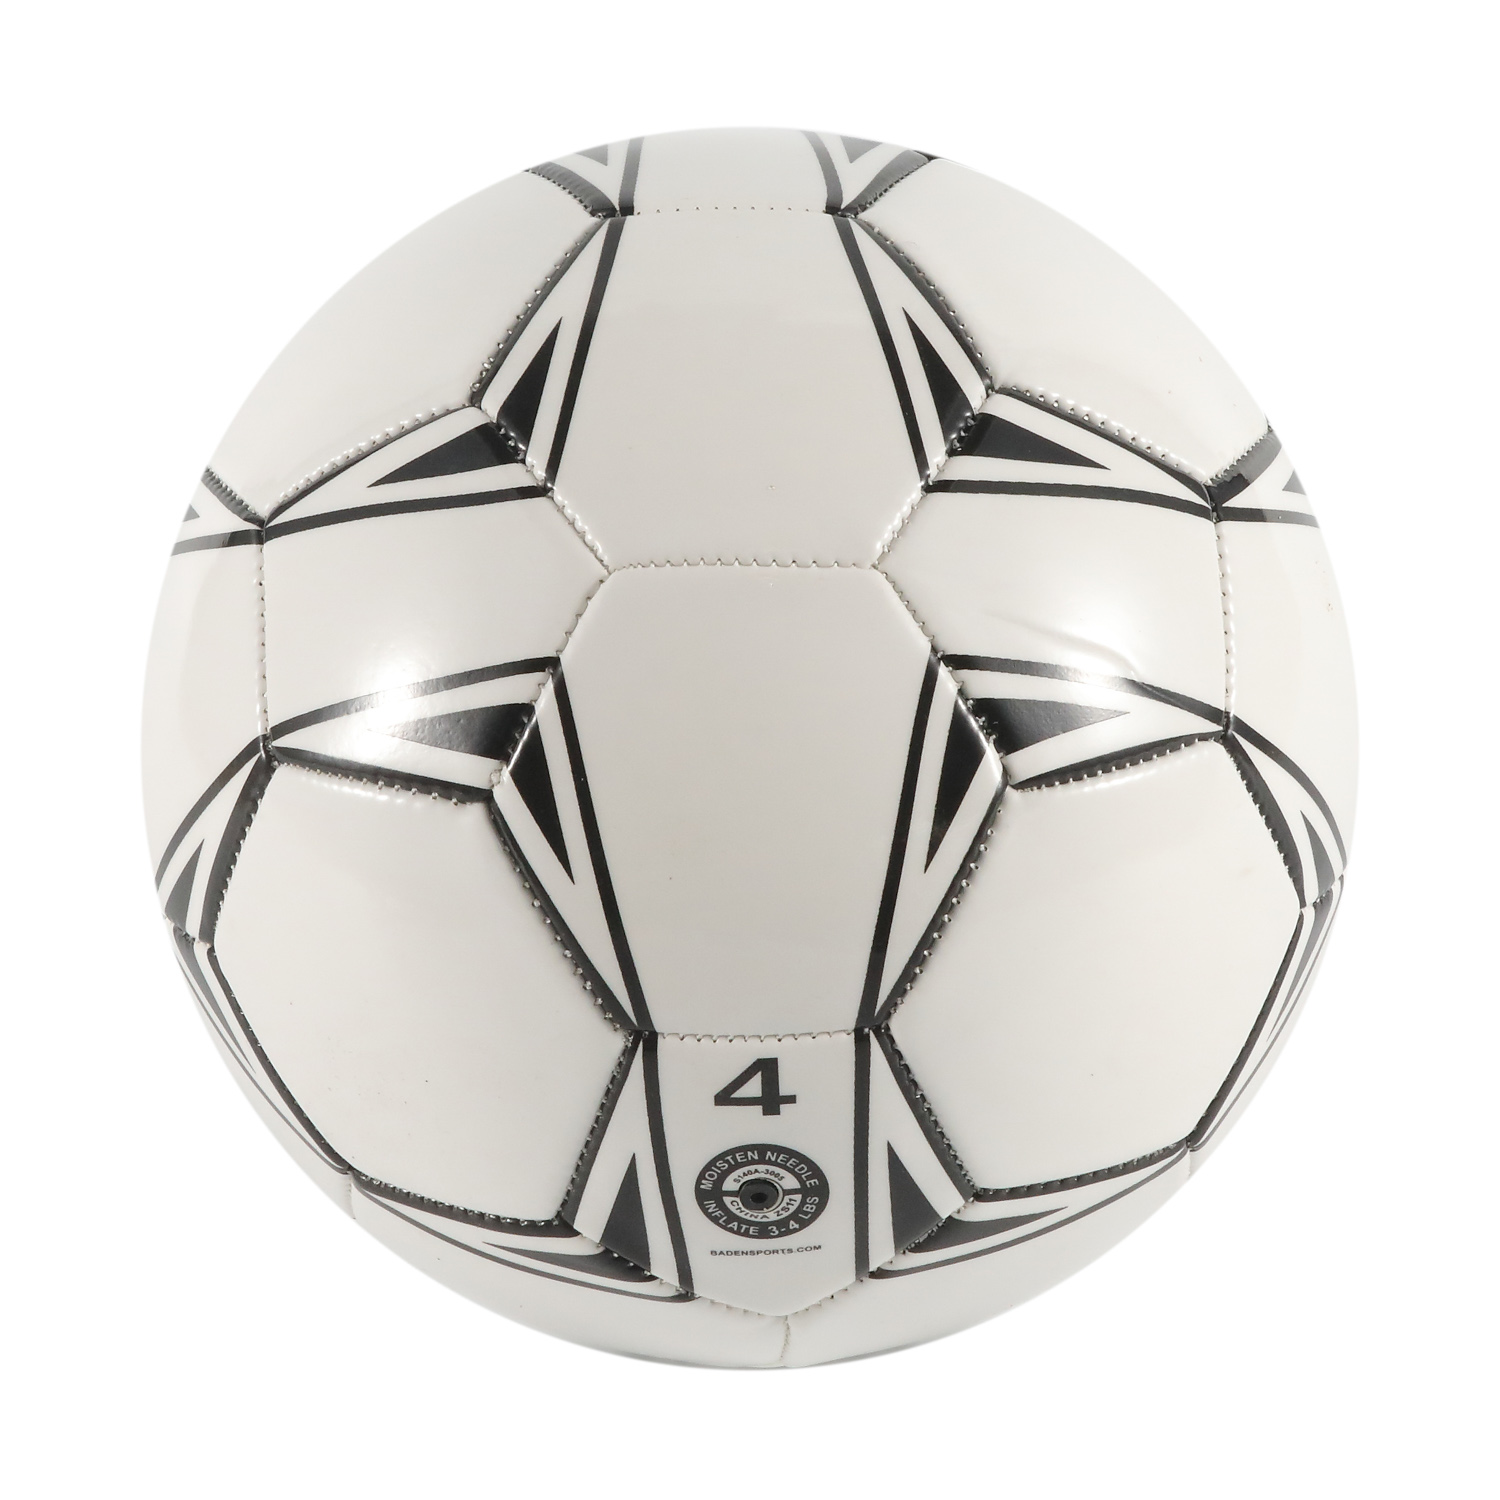 Custom Logo Mutiple Size Football Training PVC Cover Soccer Ball